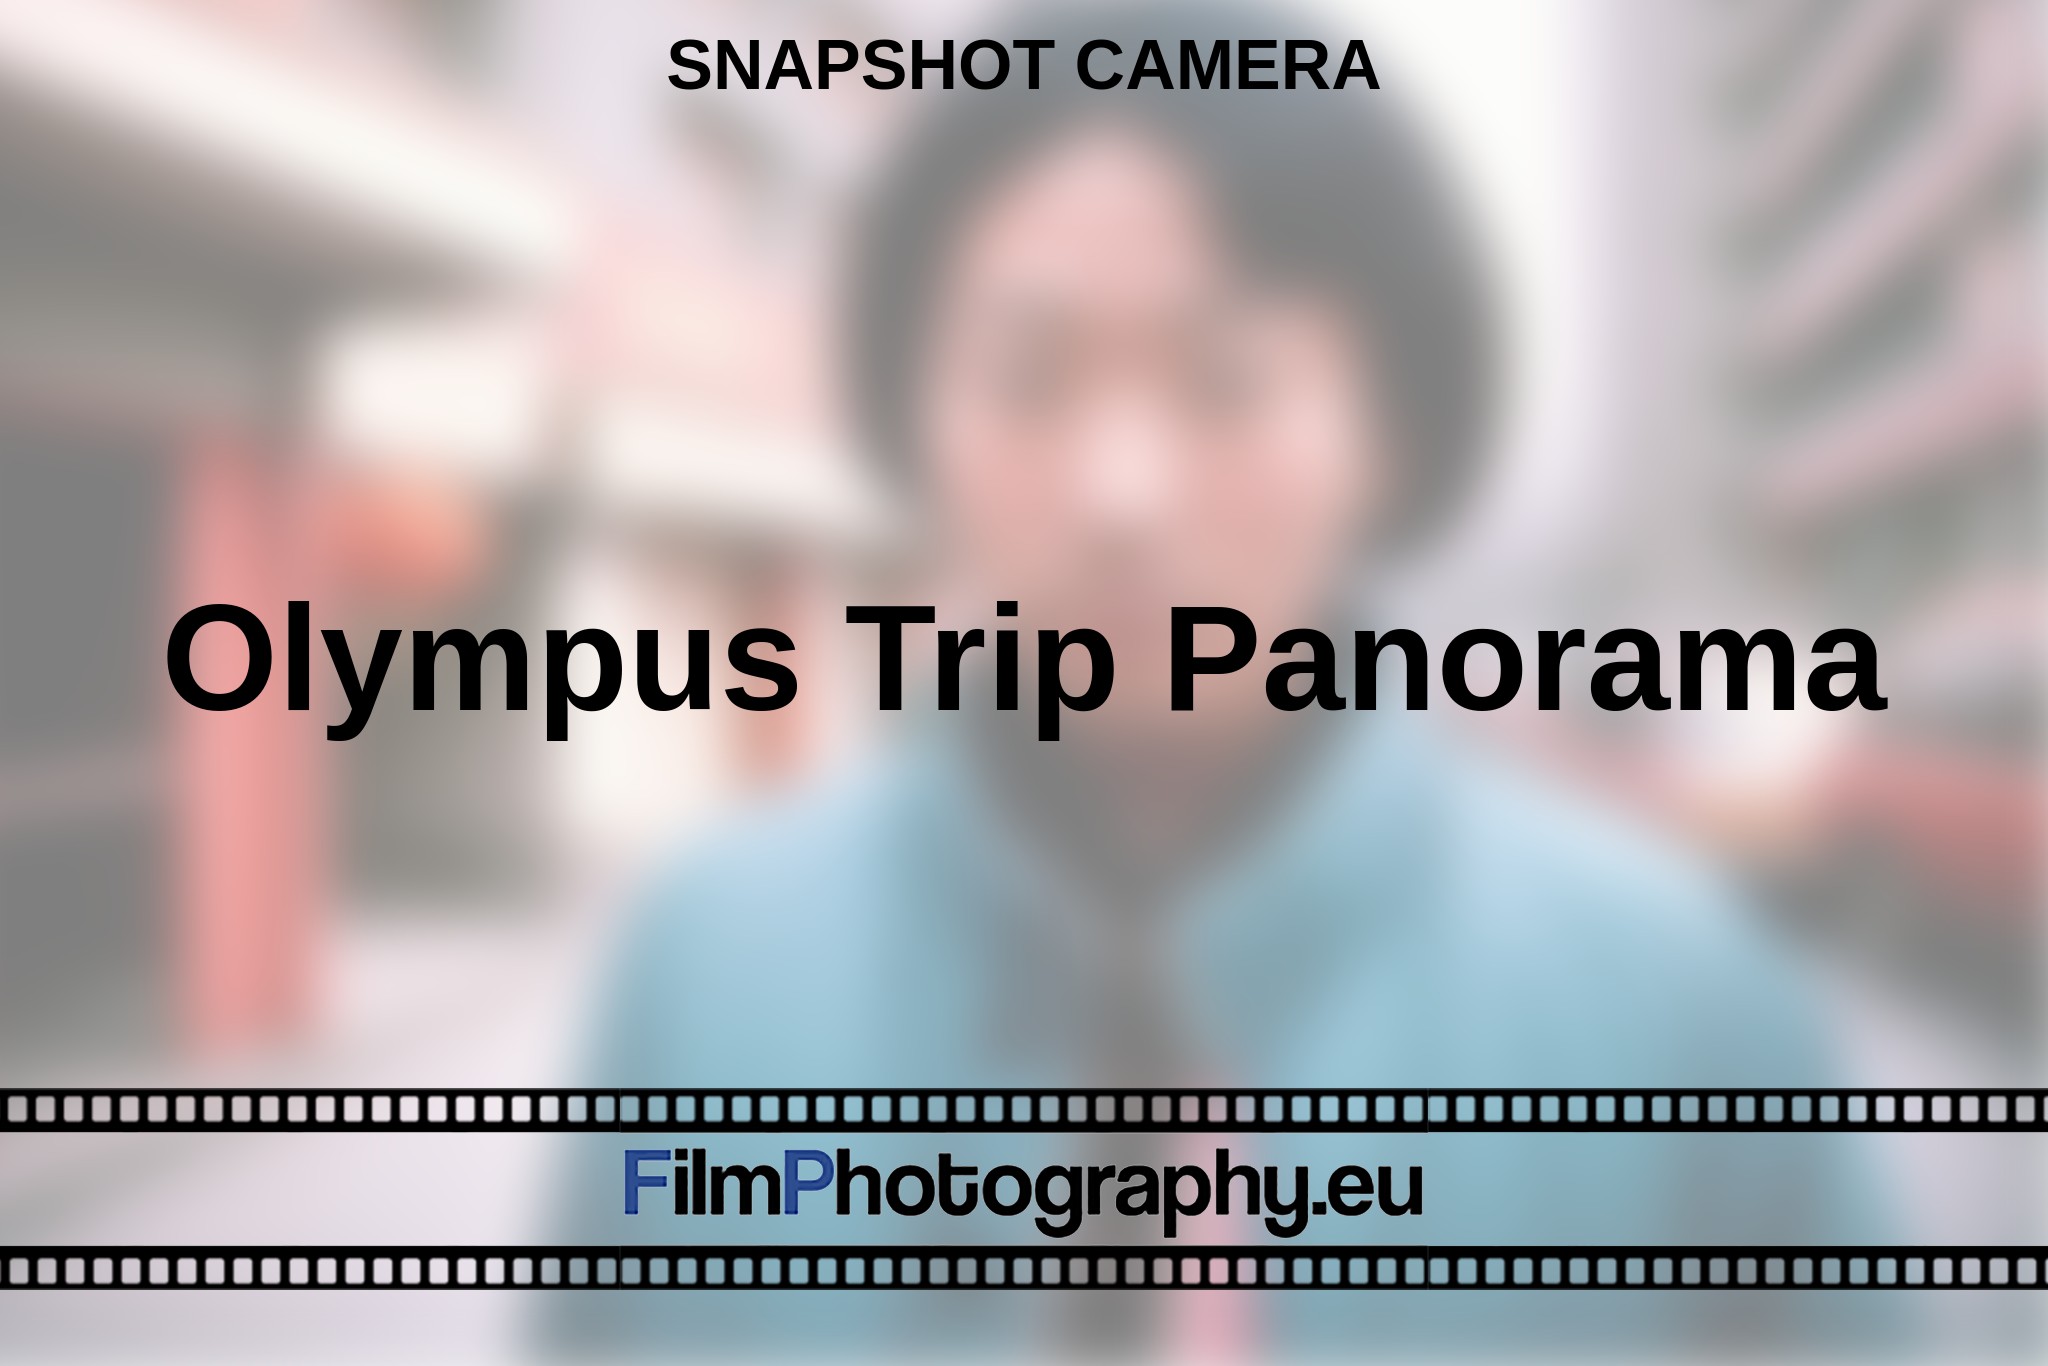 olympus-trip-panorama-snapshot-camera-en-bnv.jpg